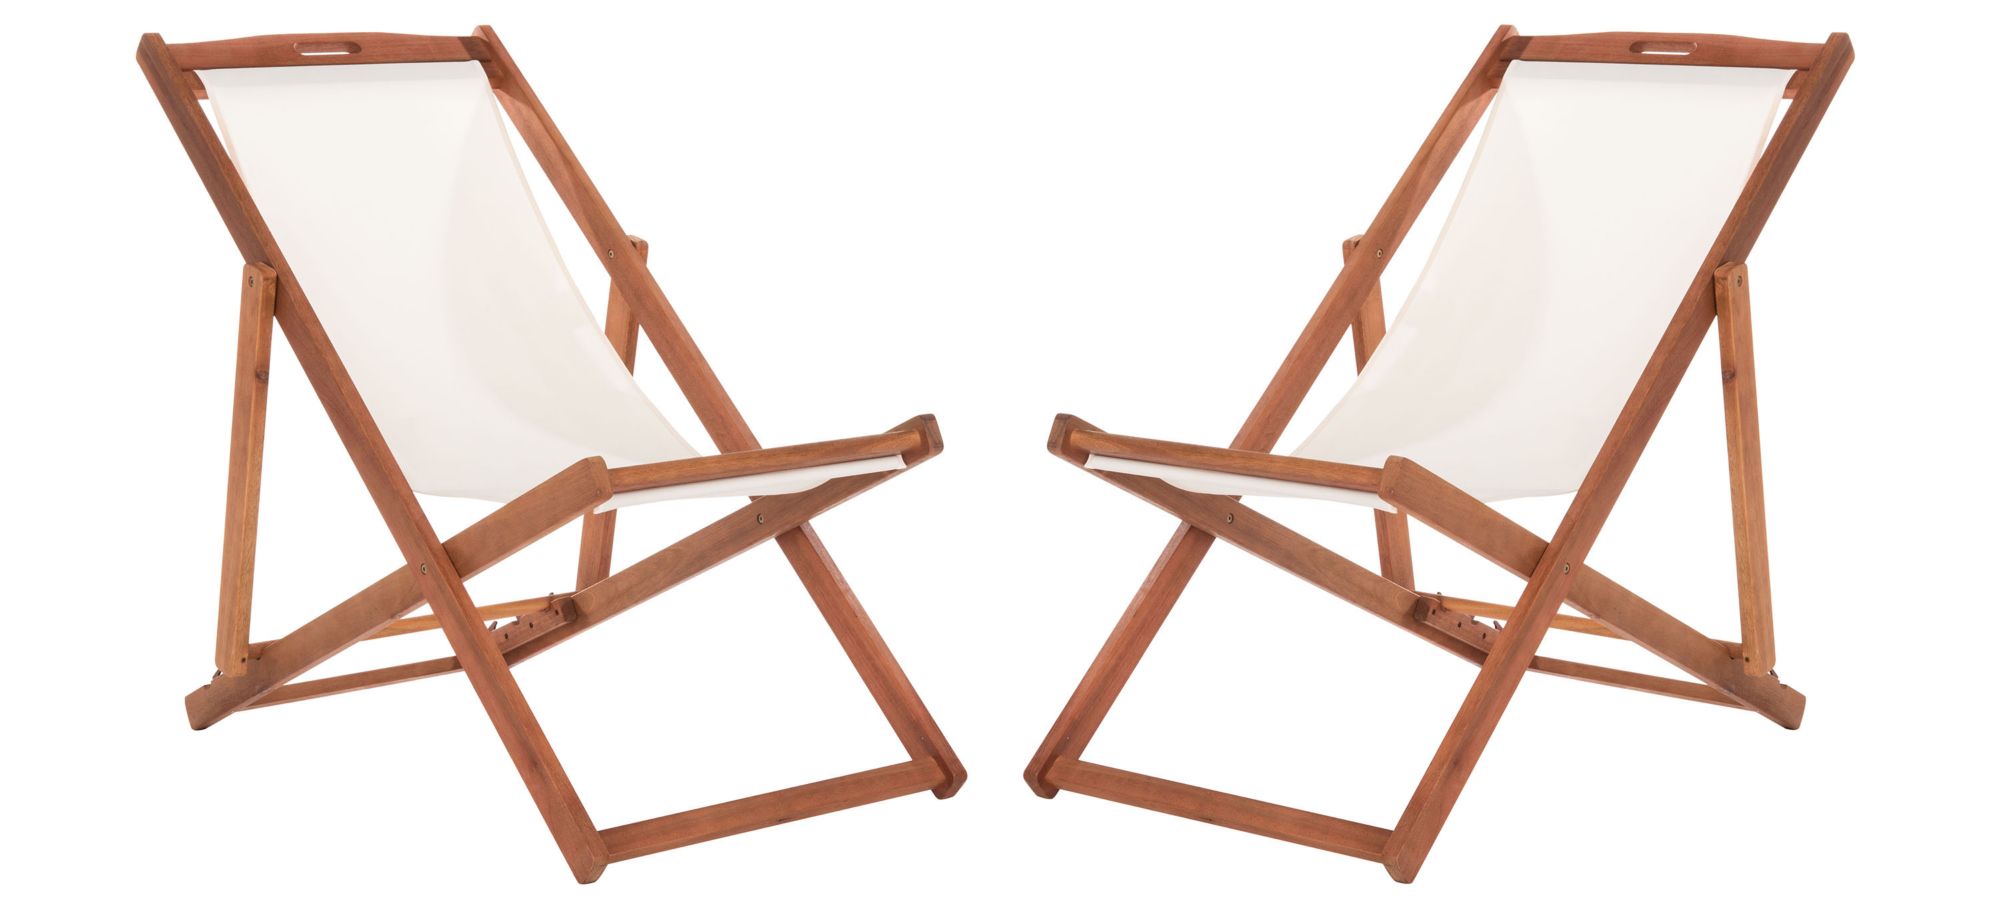 Loren Outdoor Sling Chair - Set of 2 in Beige by Safavieh